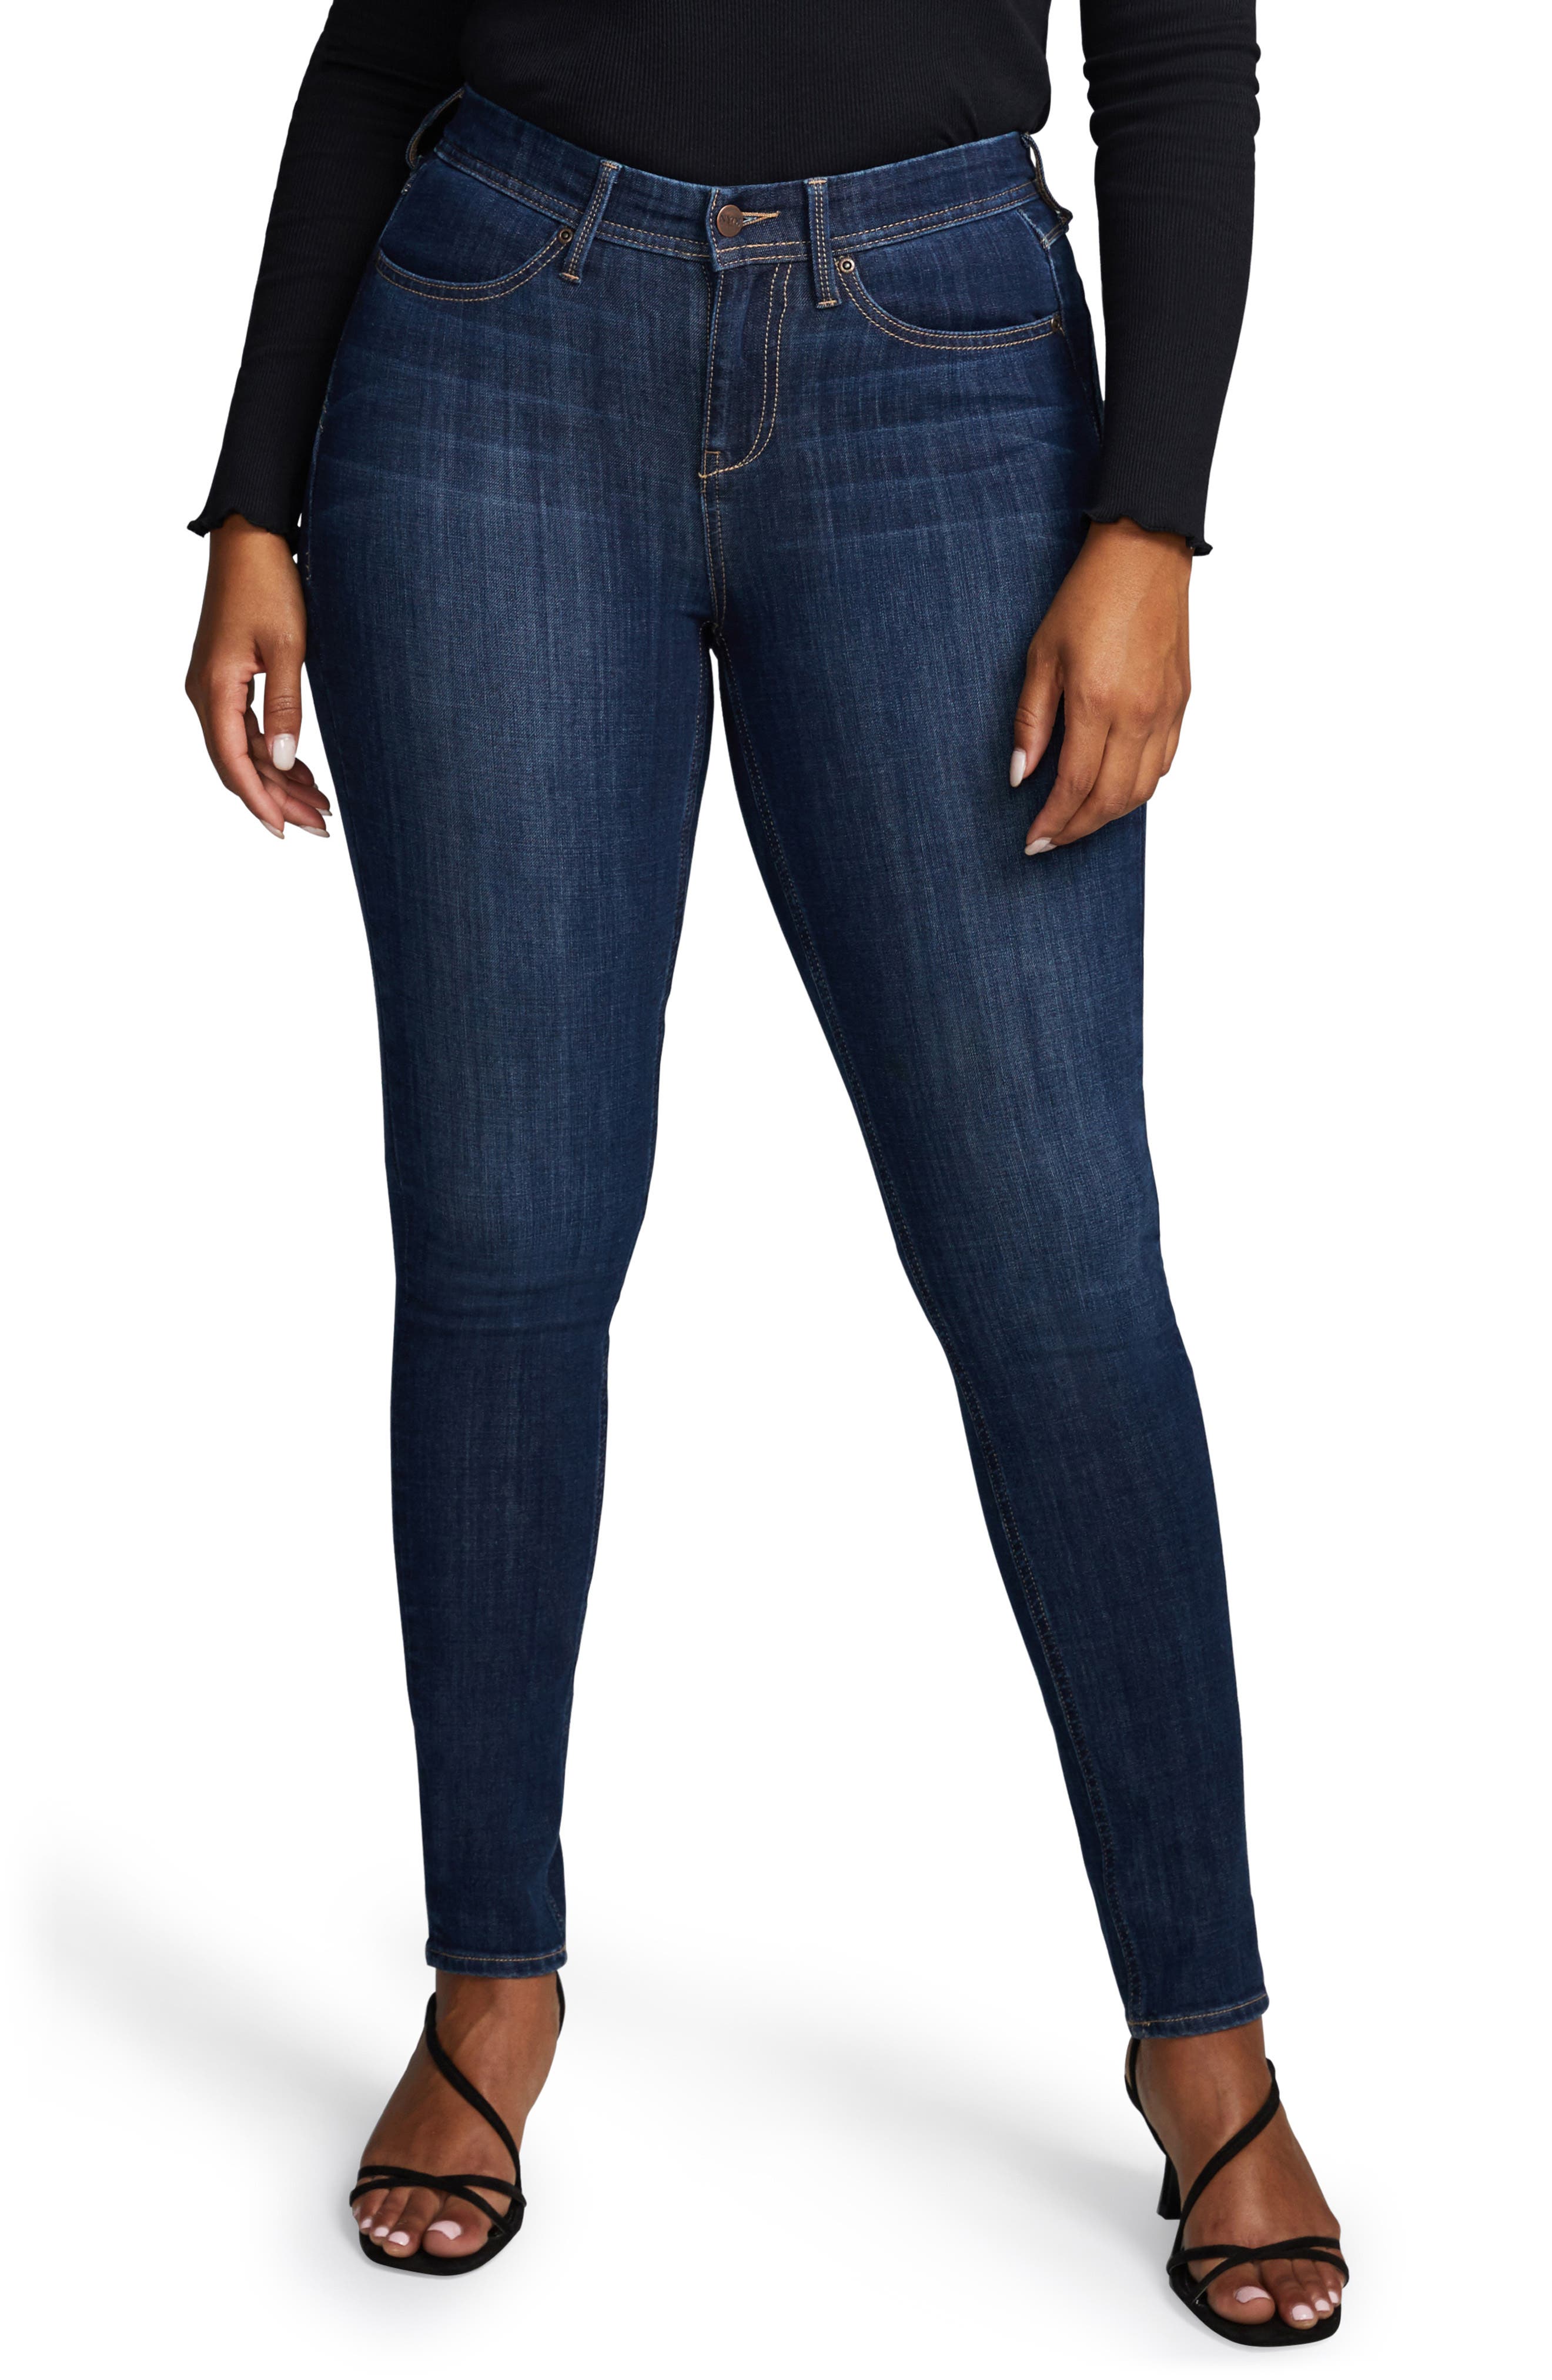 capri style jeans